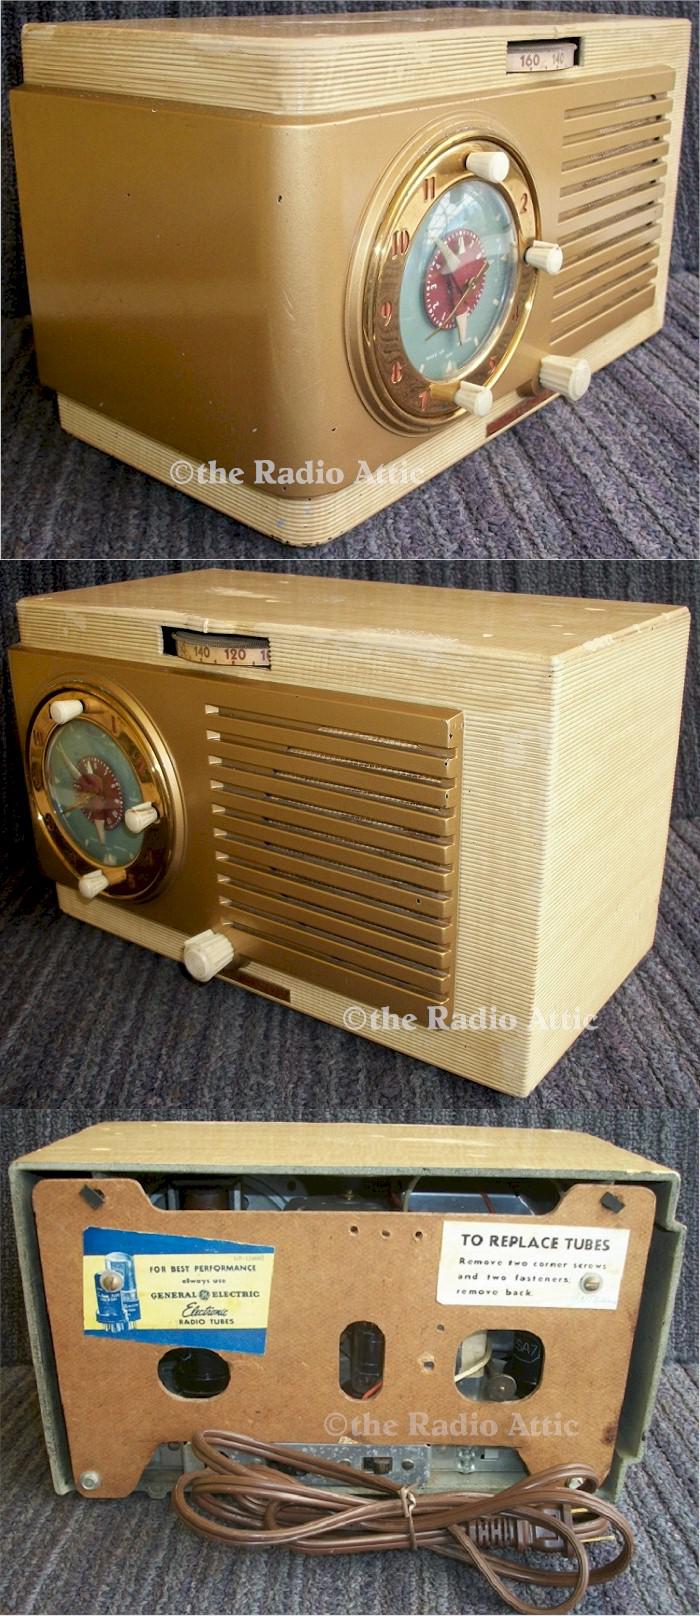 General Electric 508 Clock Radio (1950)